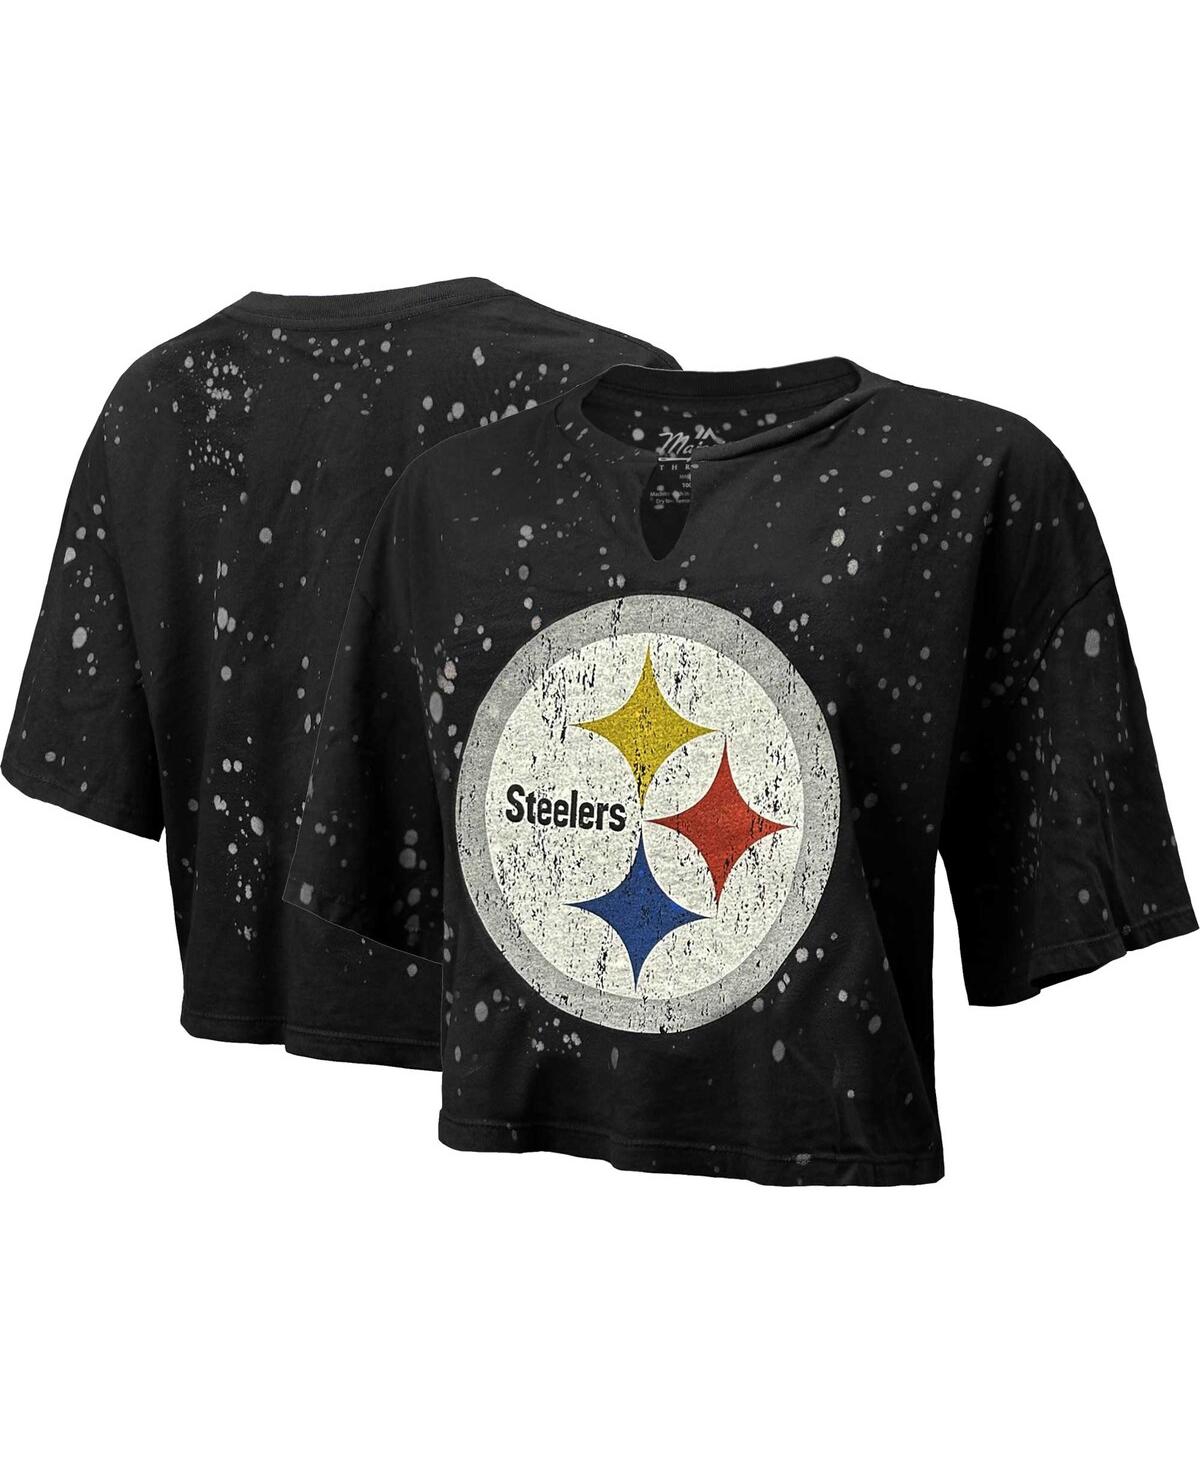 Women's Majestic Threads Black Distressed Pittsburgh Steelers Bleach Splatter Notch Neck Crop T-shirt - Black